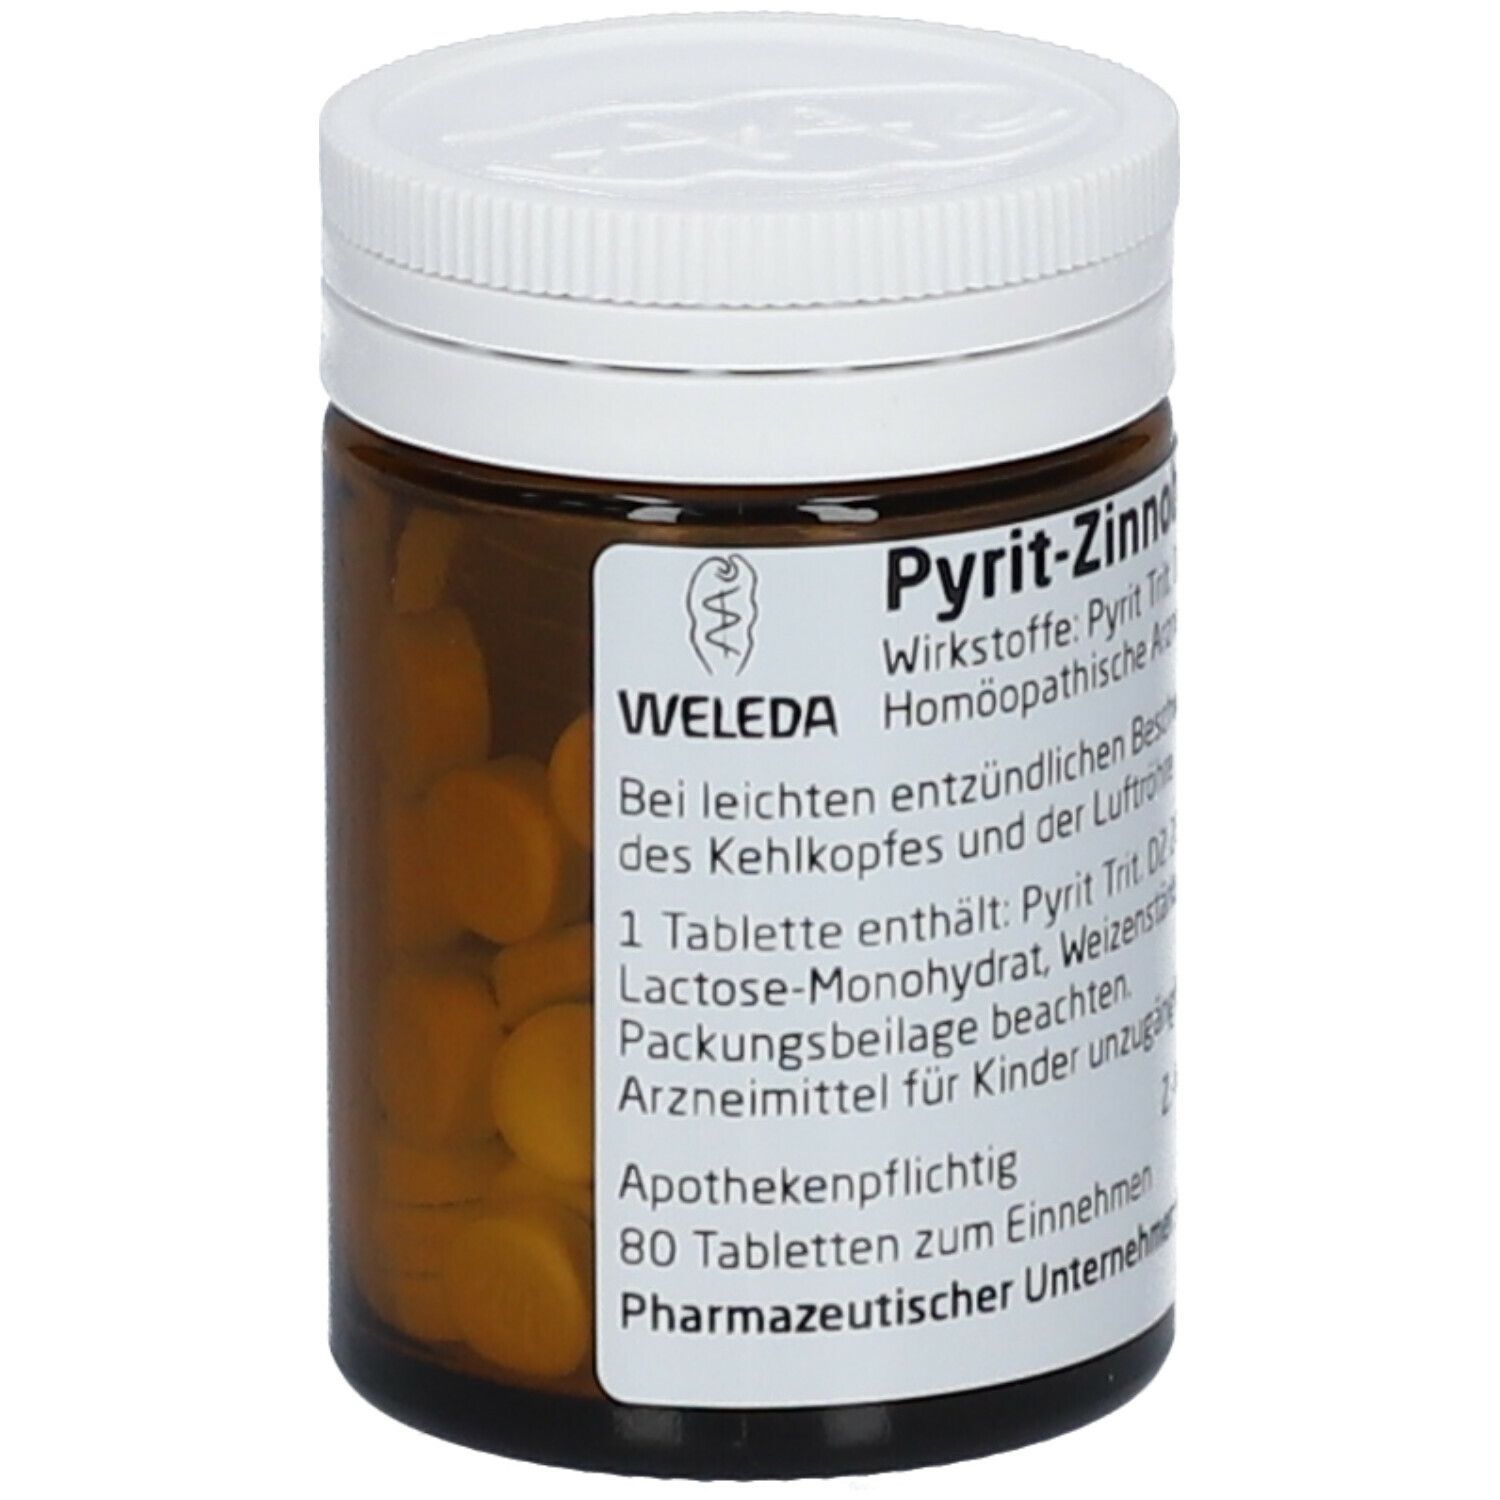 WELEDA Pyrit-Zinnober Tabletten